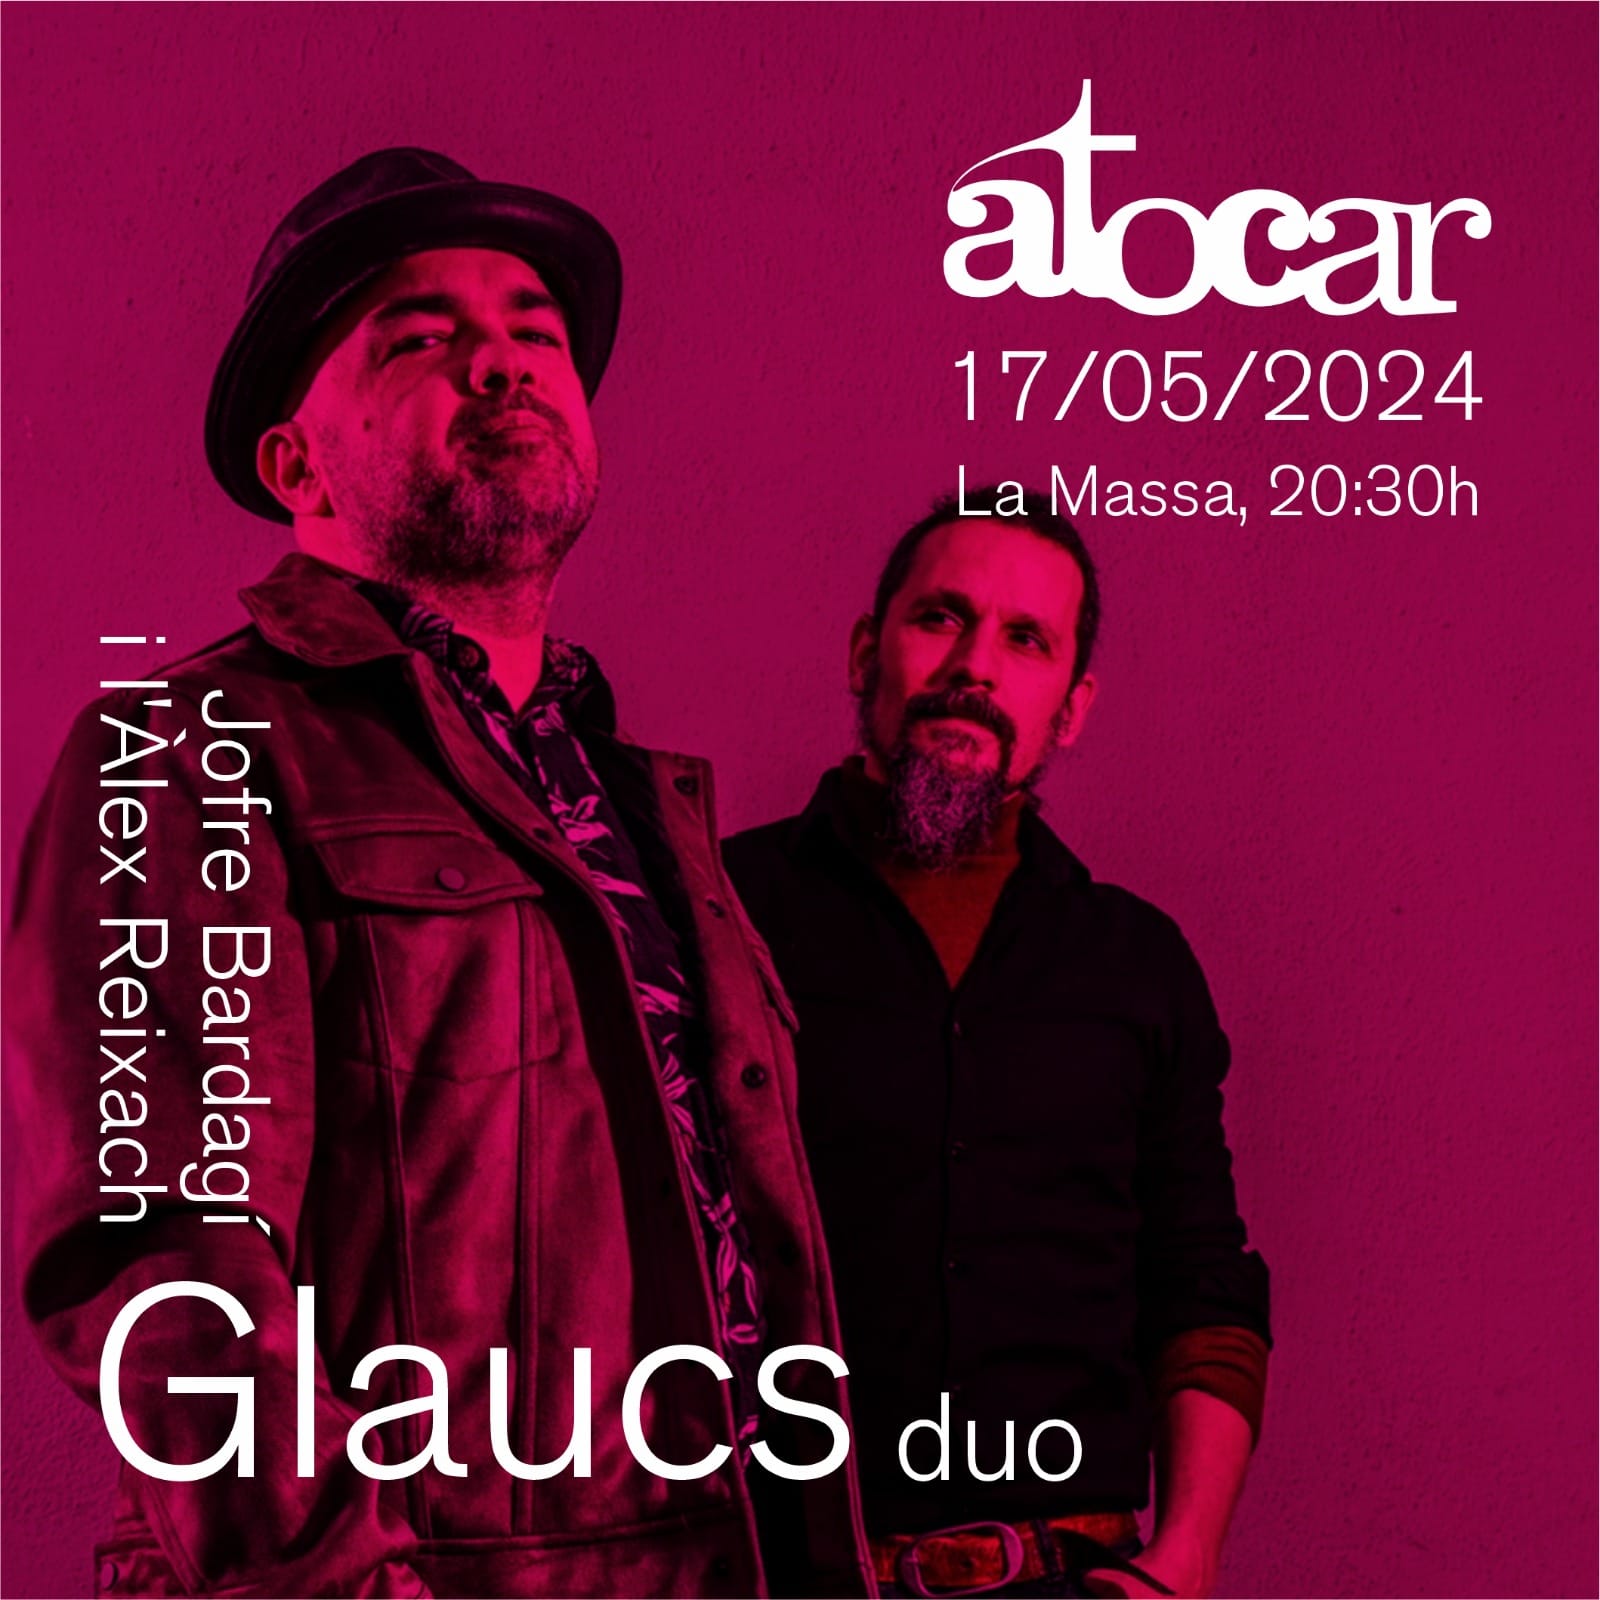 Cicle Atocar. Glaucs duo